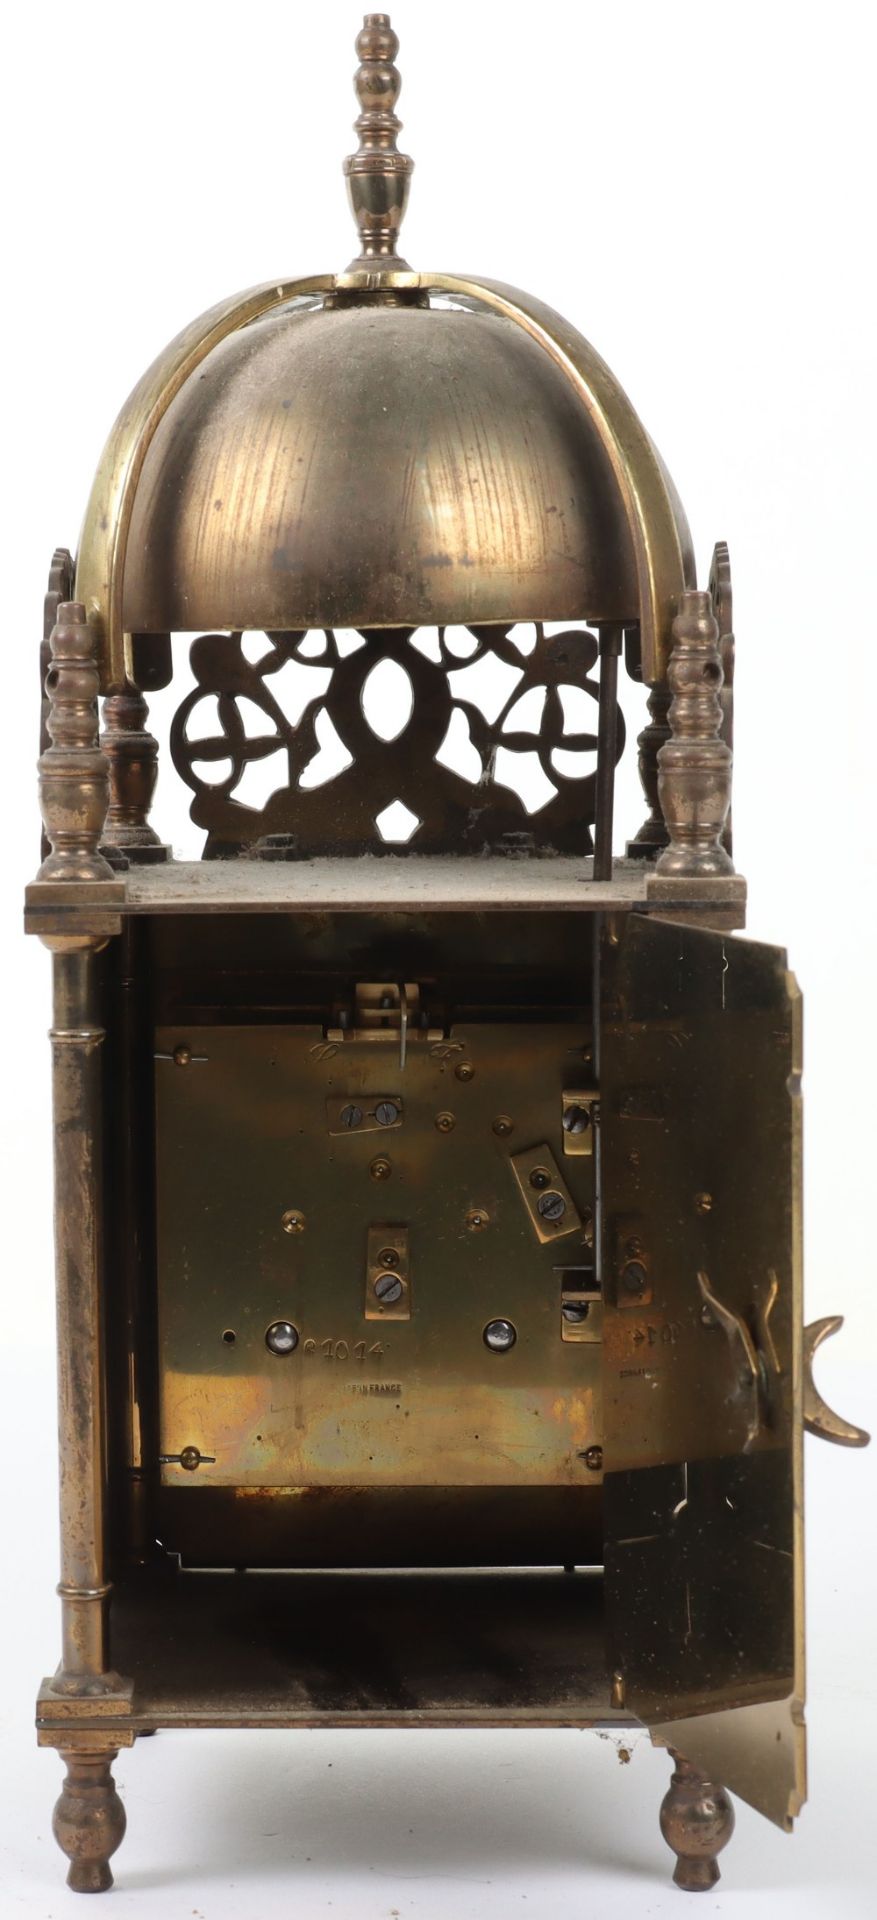 A 17th century style brass lantern clock - Image 4 of 9